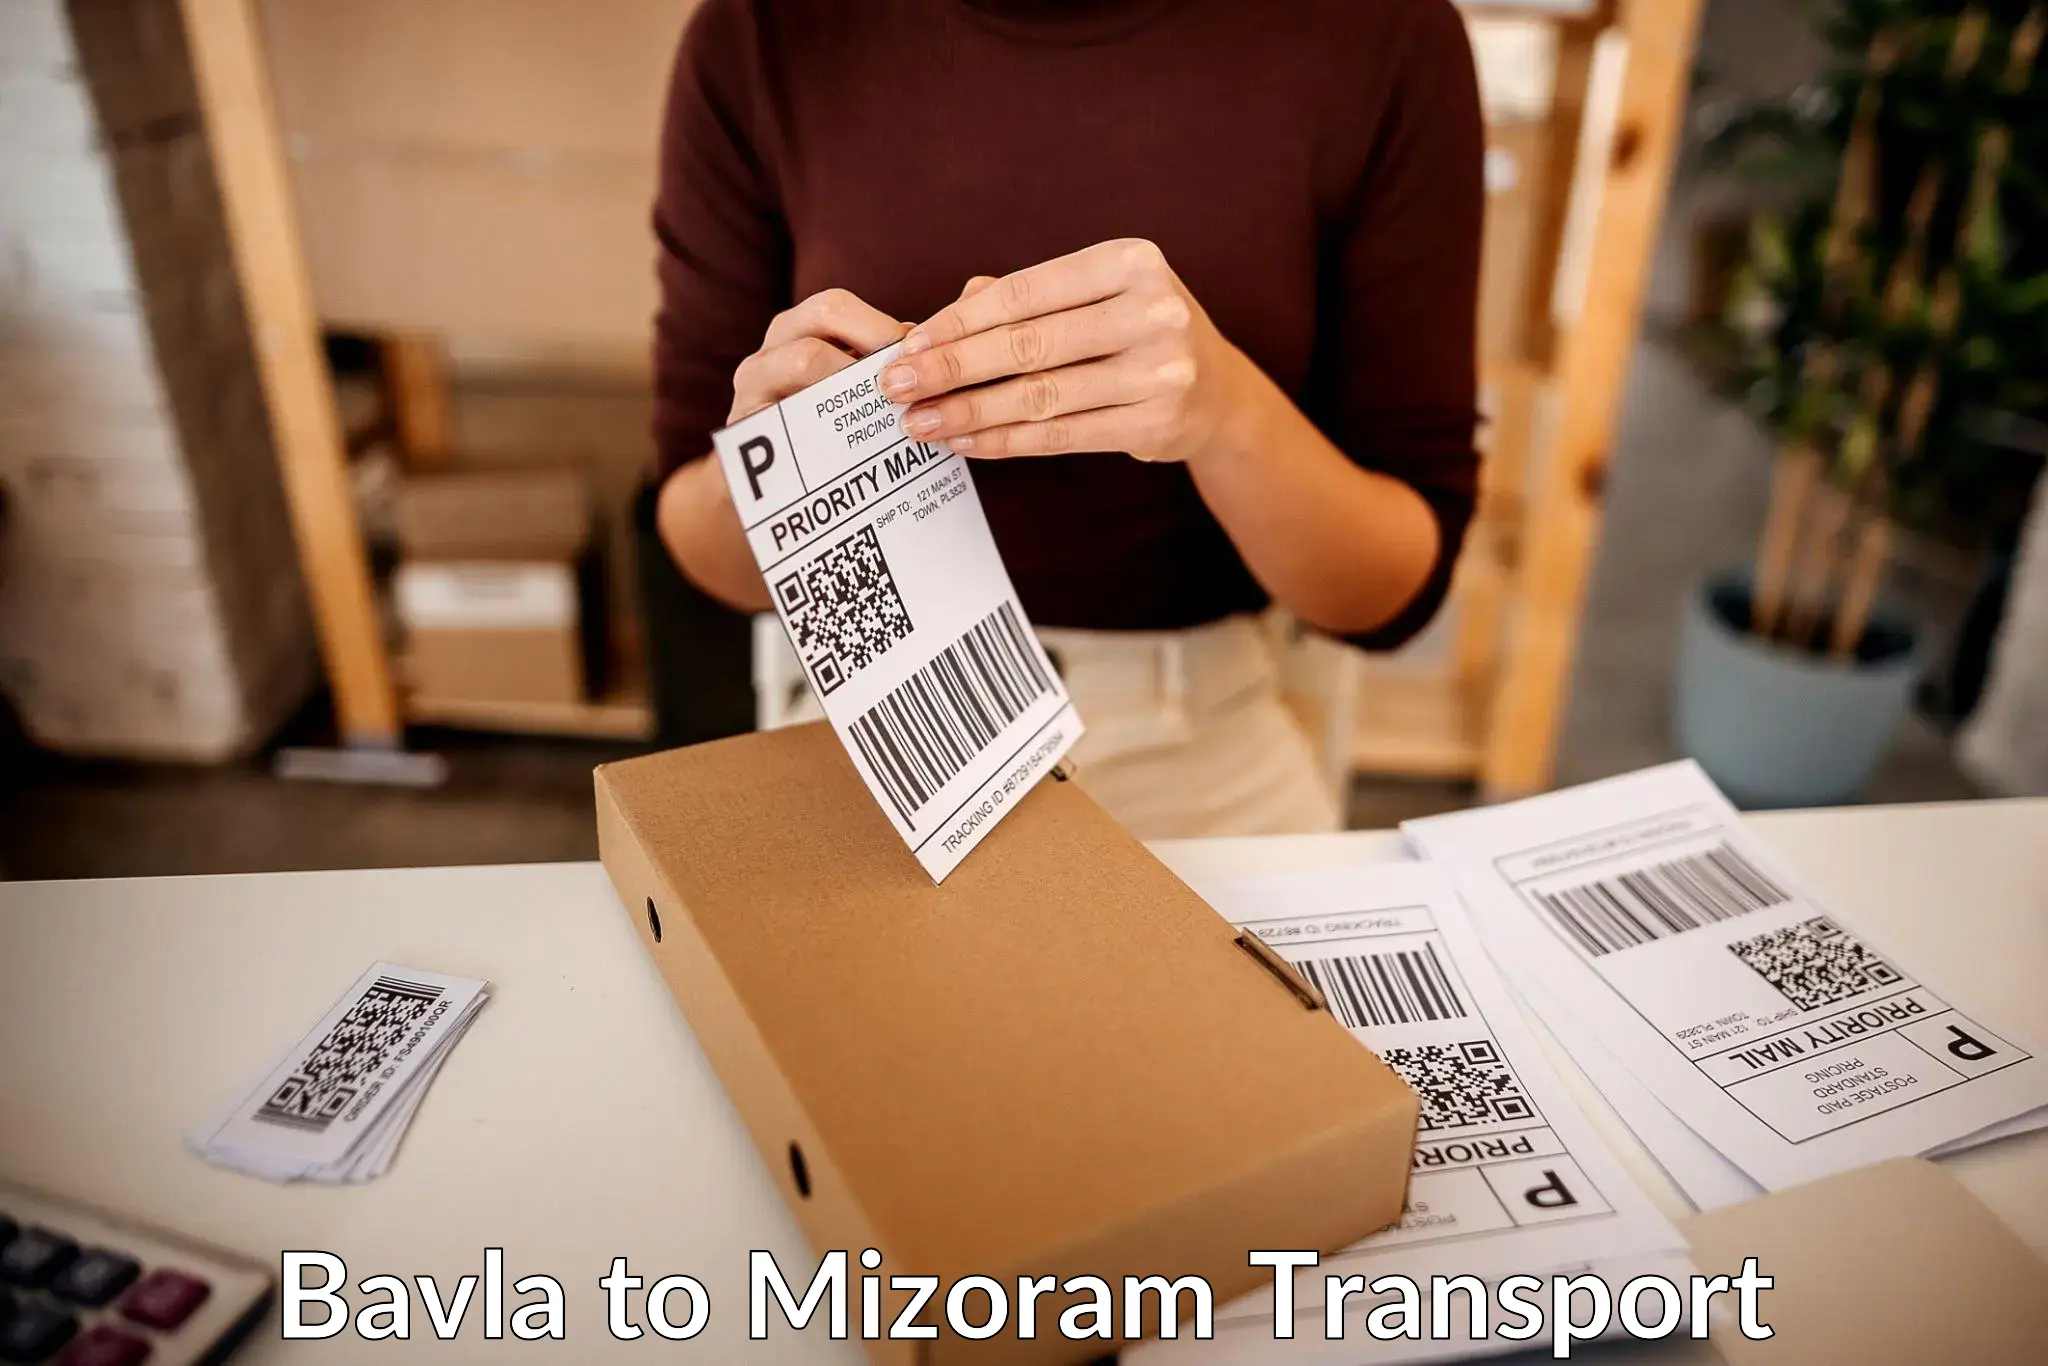 Transport shared services Bavla to Mizoram